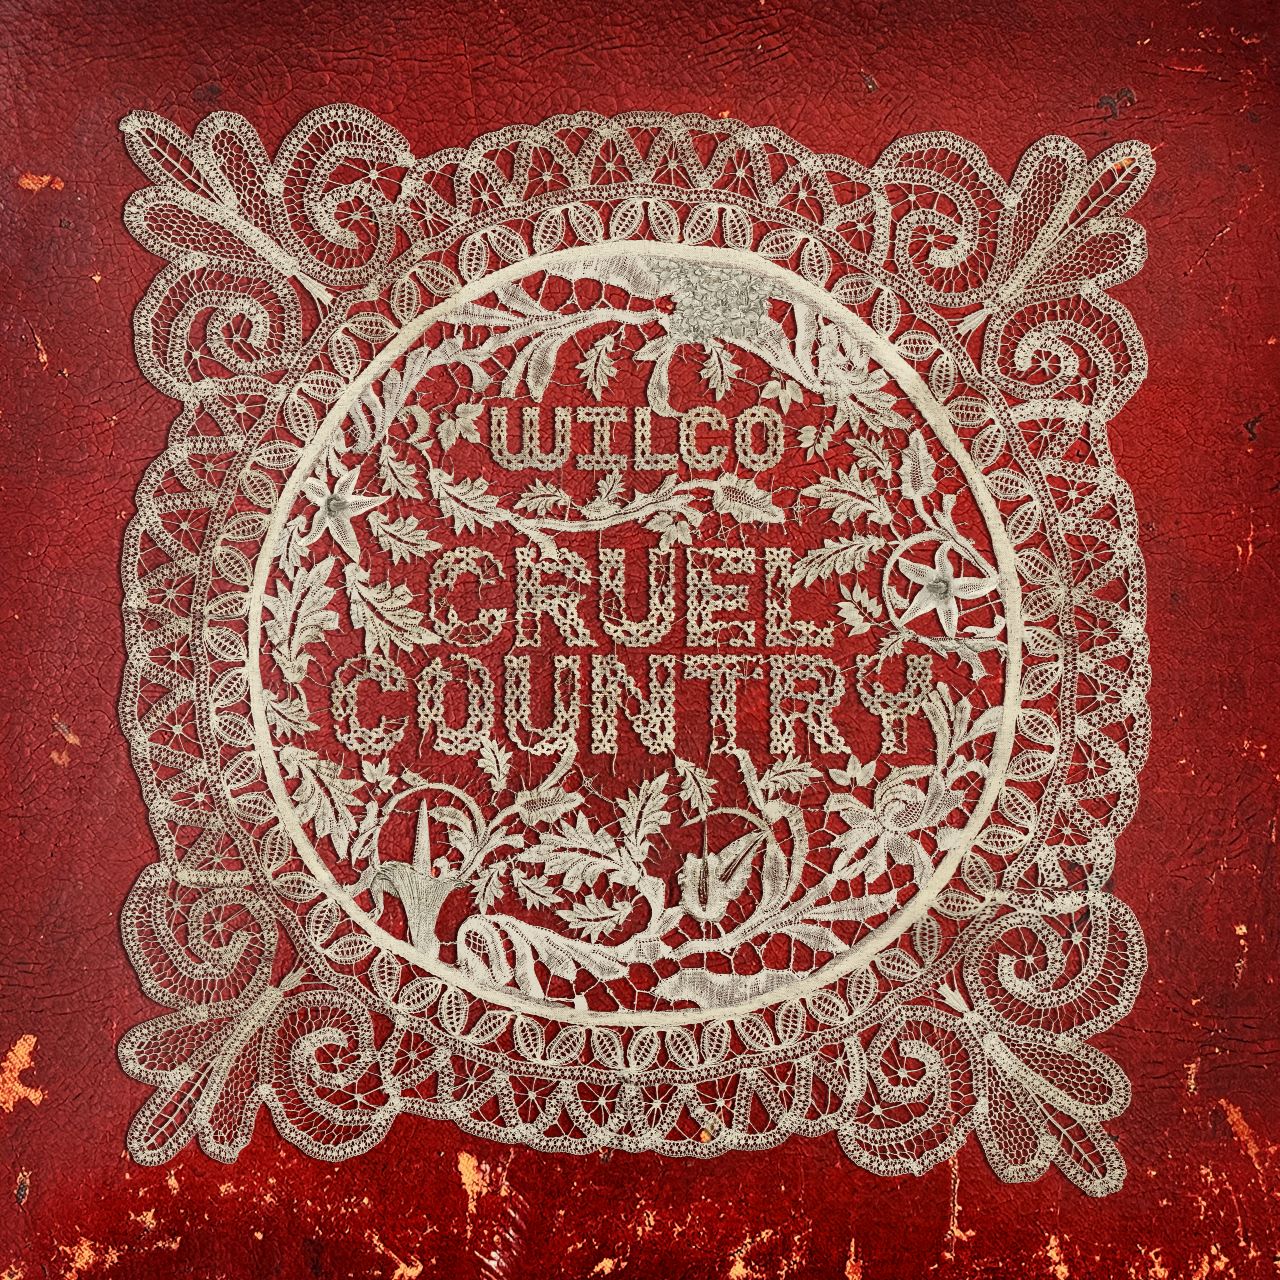 Jeff Tweedy & Wilco - Cruel Country cover album